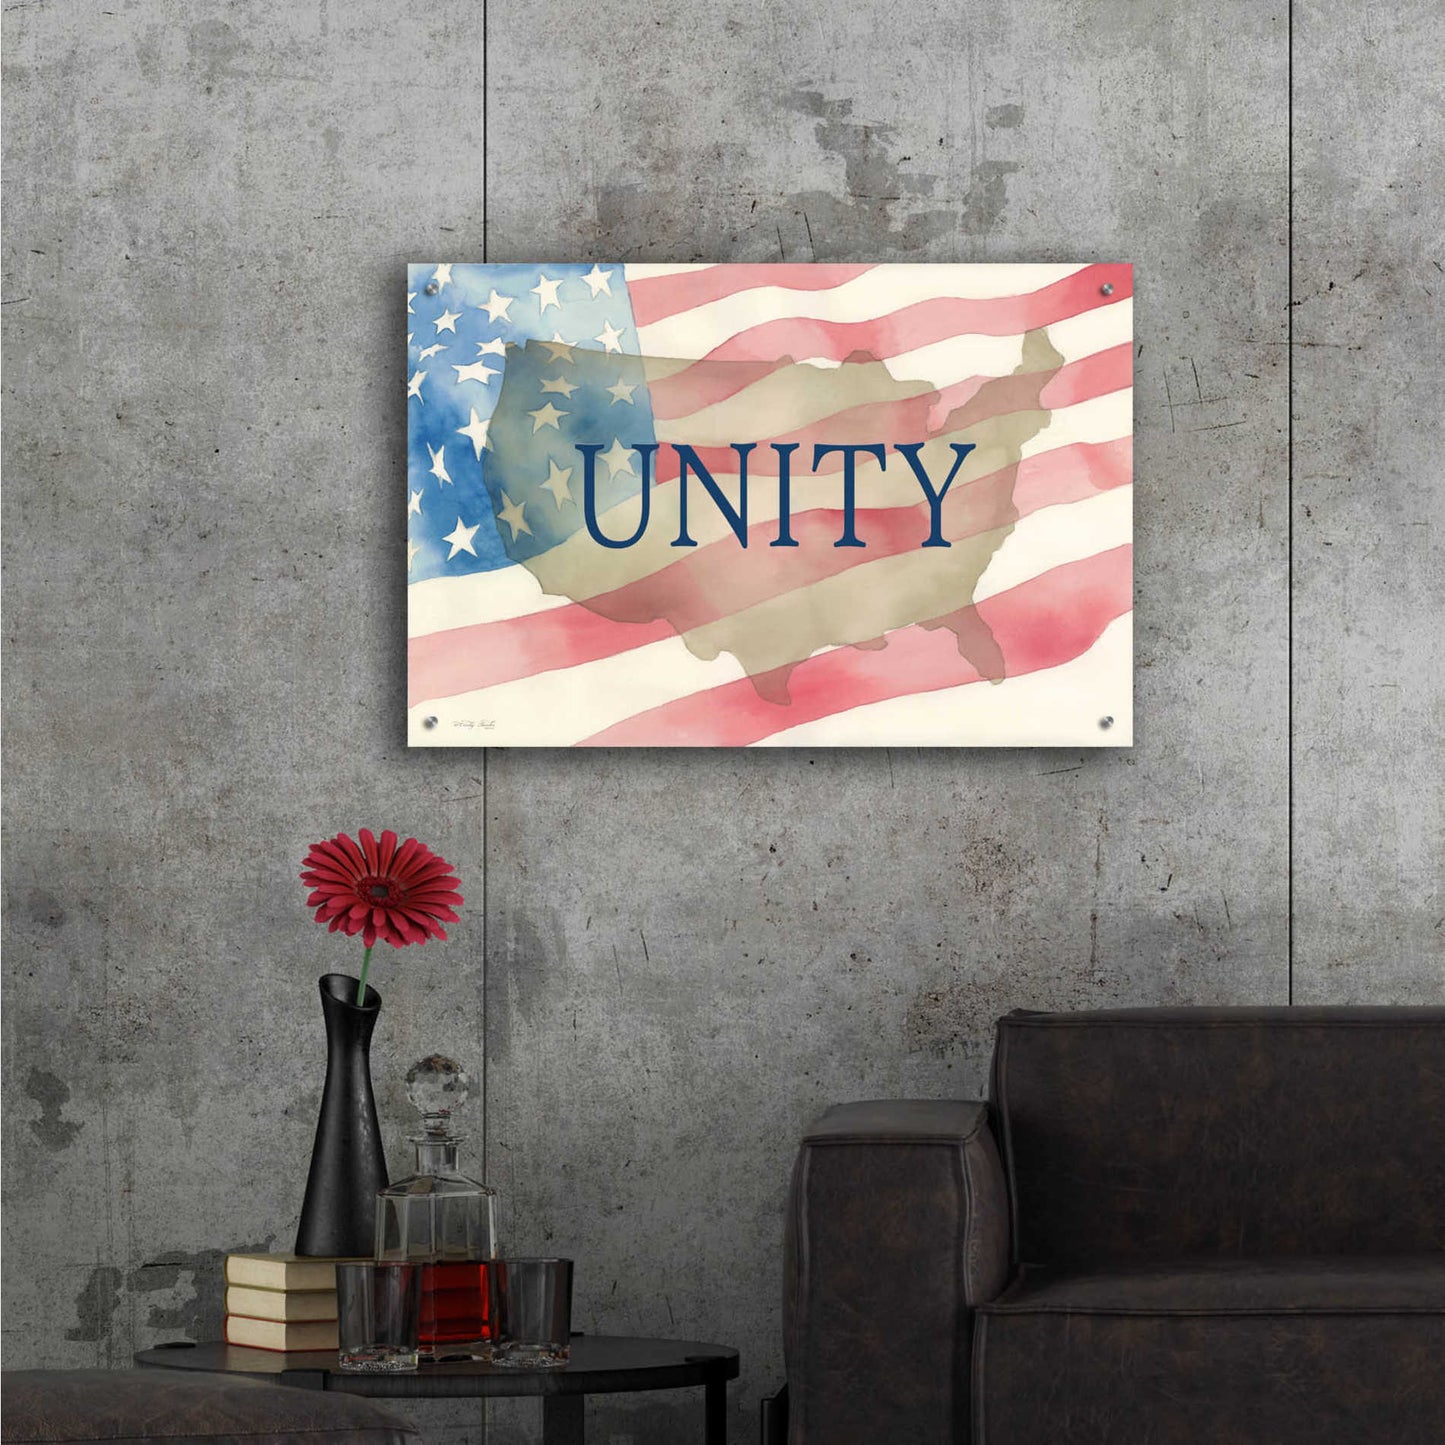 Epic Art 'USA Unity' by Cindy Jacobs, Acrylic Glass Wall Art,36x24